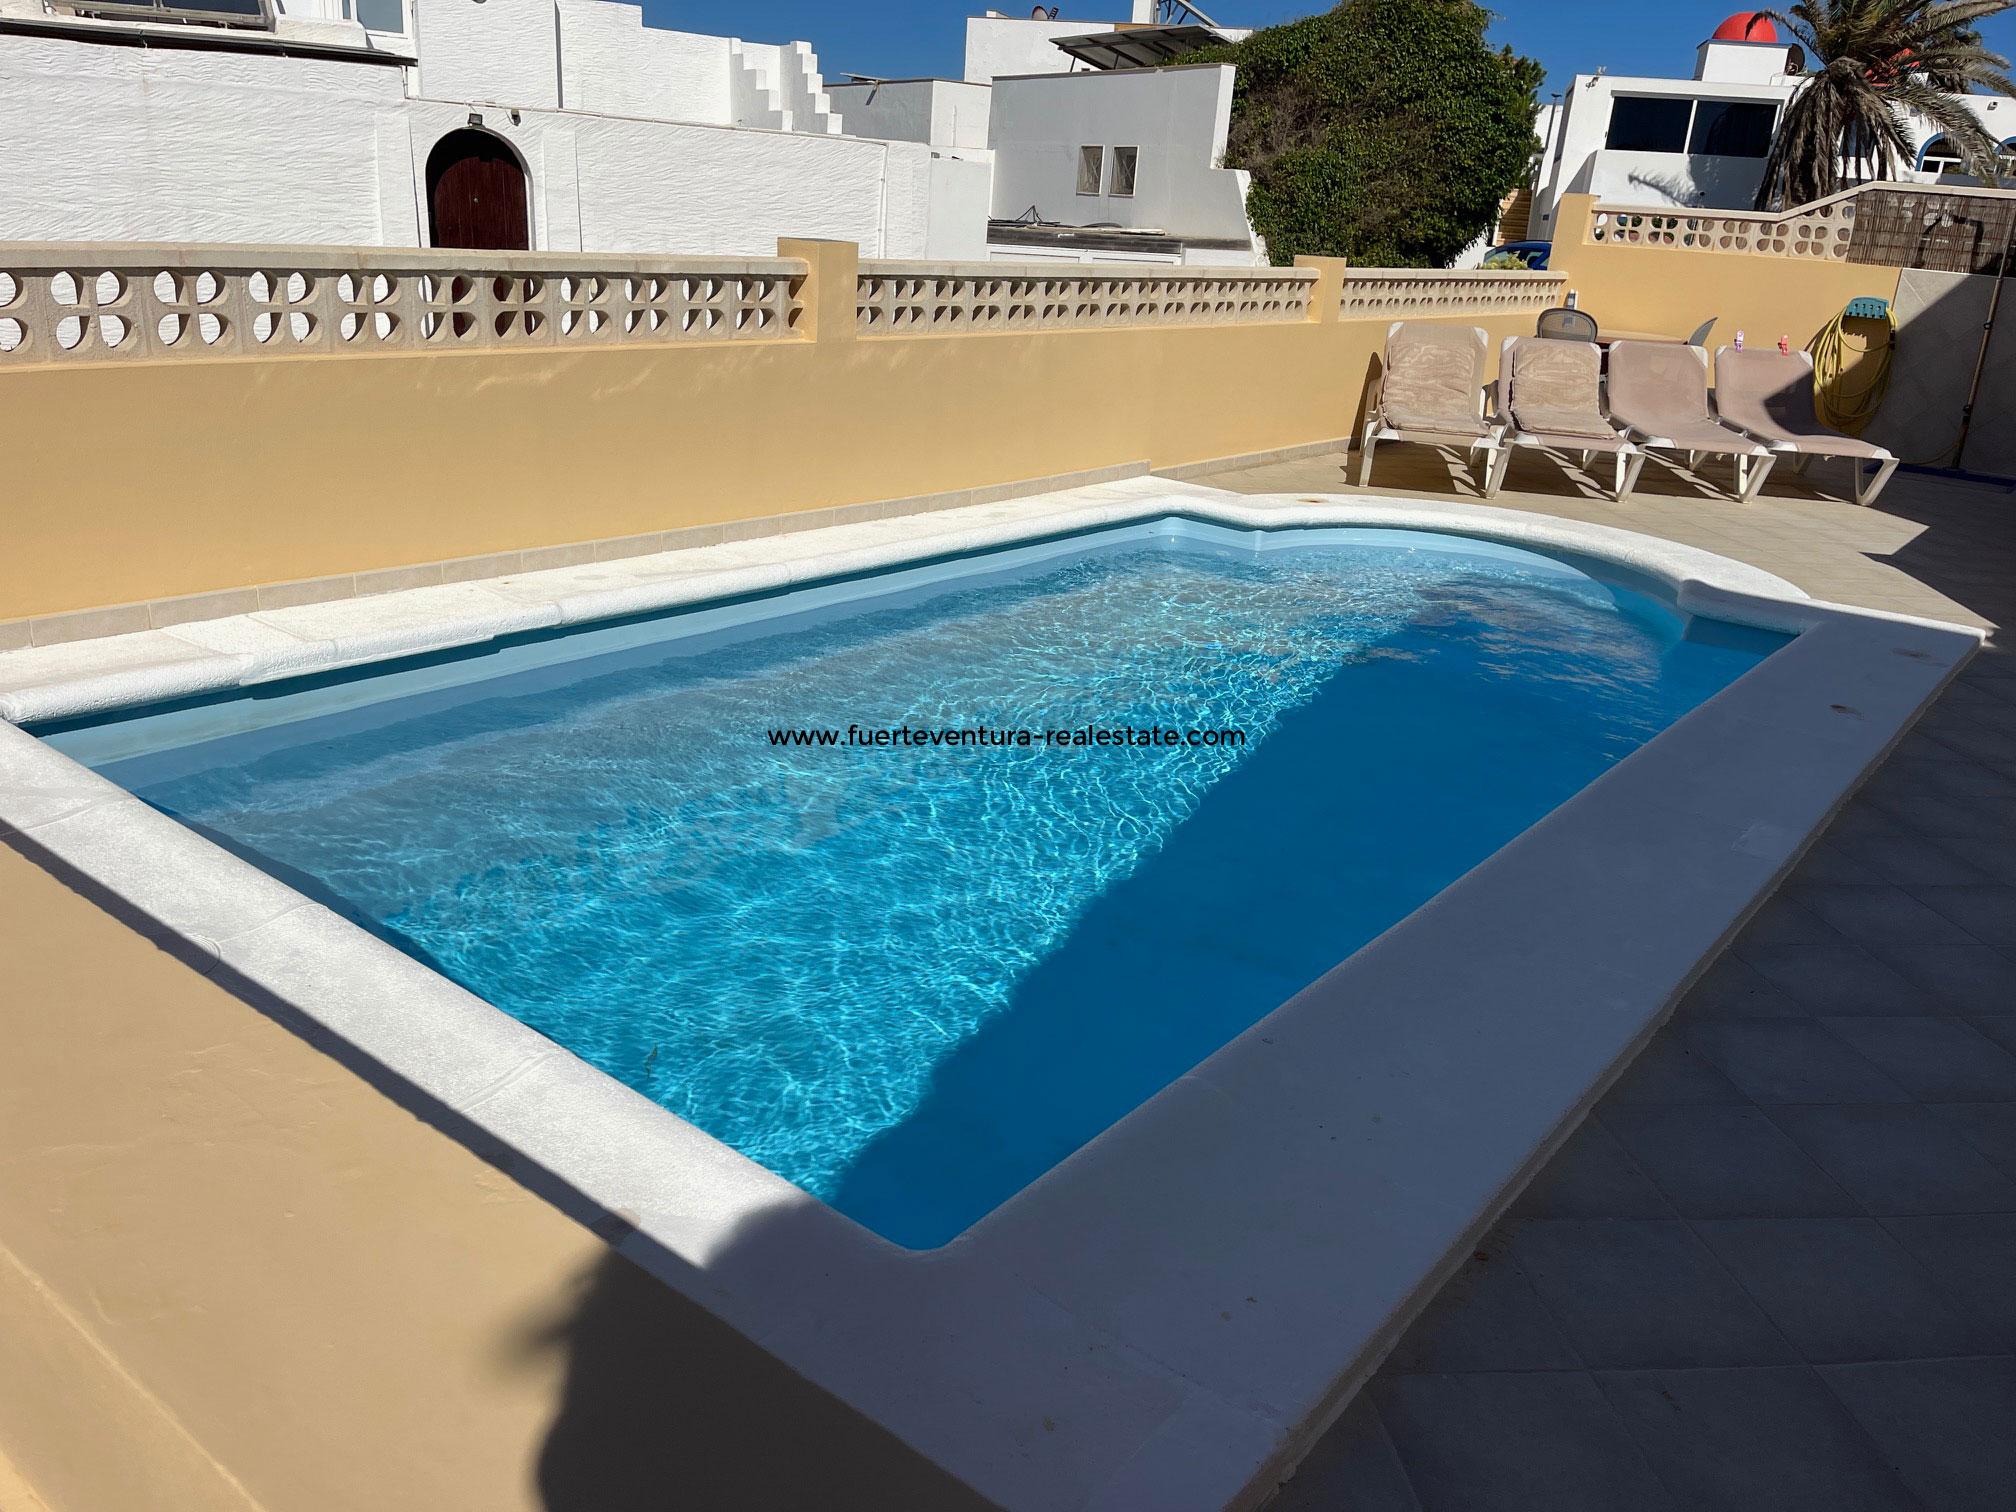 Fantastique Villa avec piscine sur la plage de Corralejo